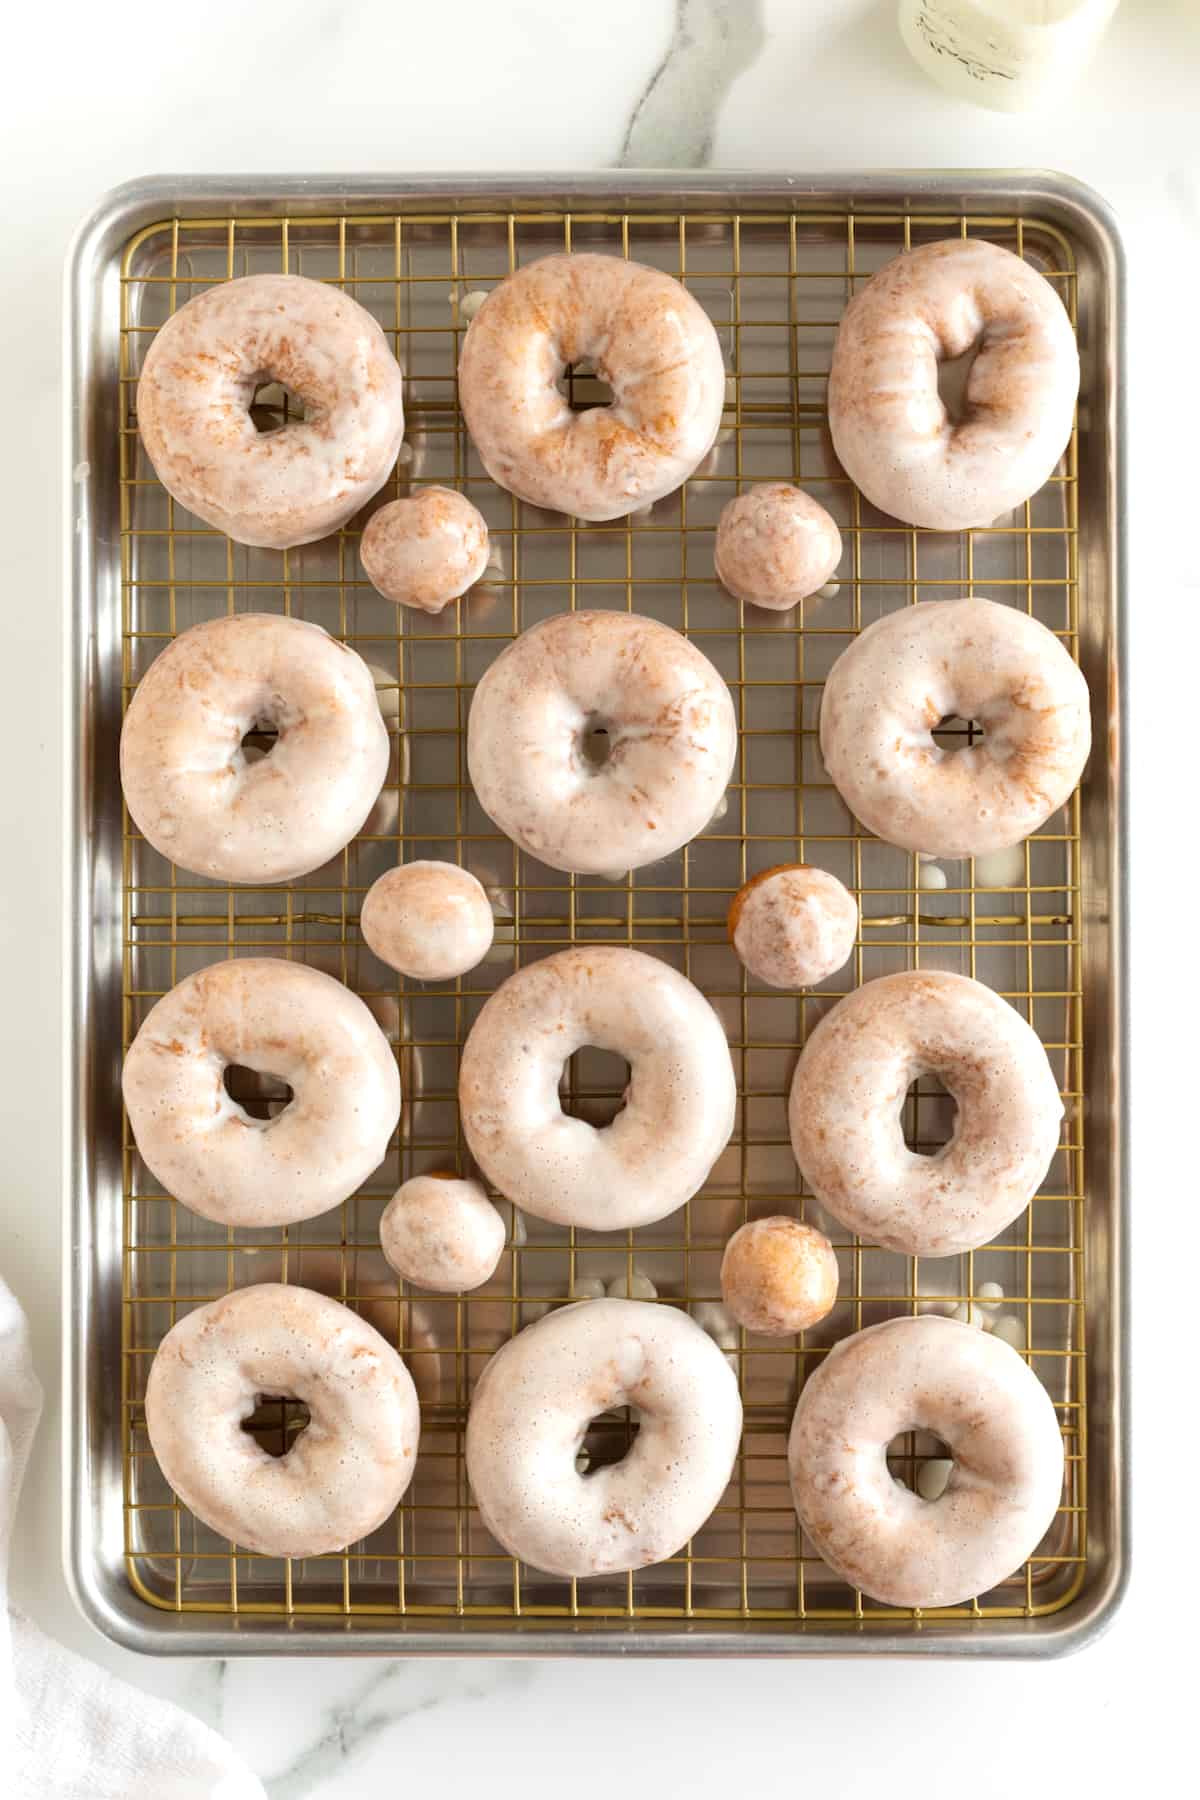 12 glazed donuts and six glazed donut holes on an aluminum baking sheet.